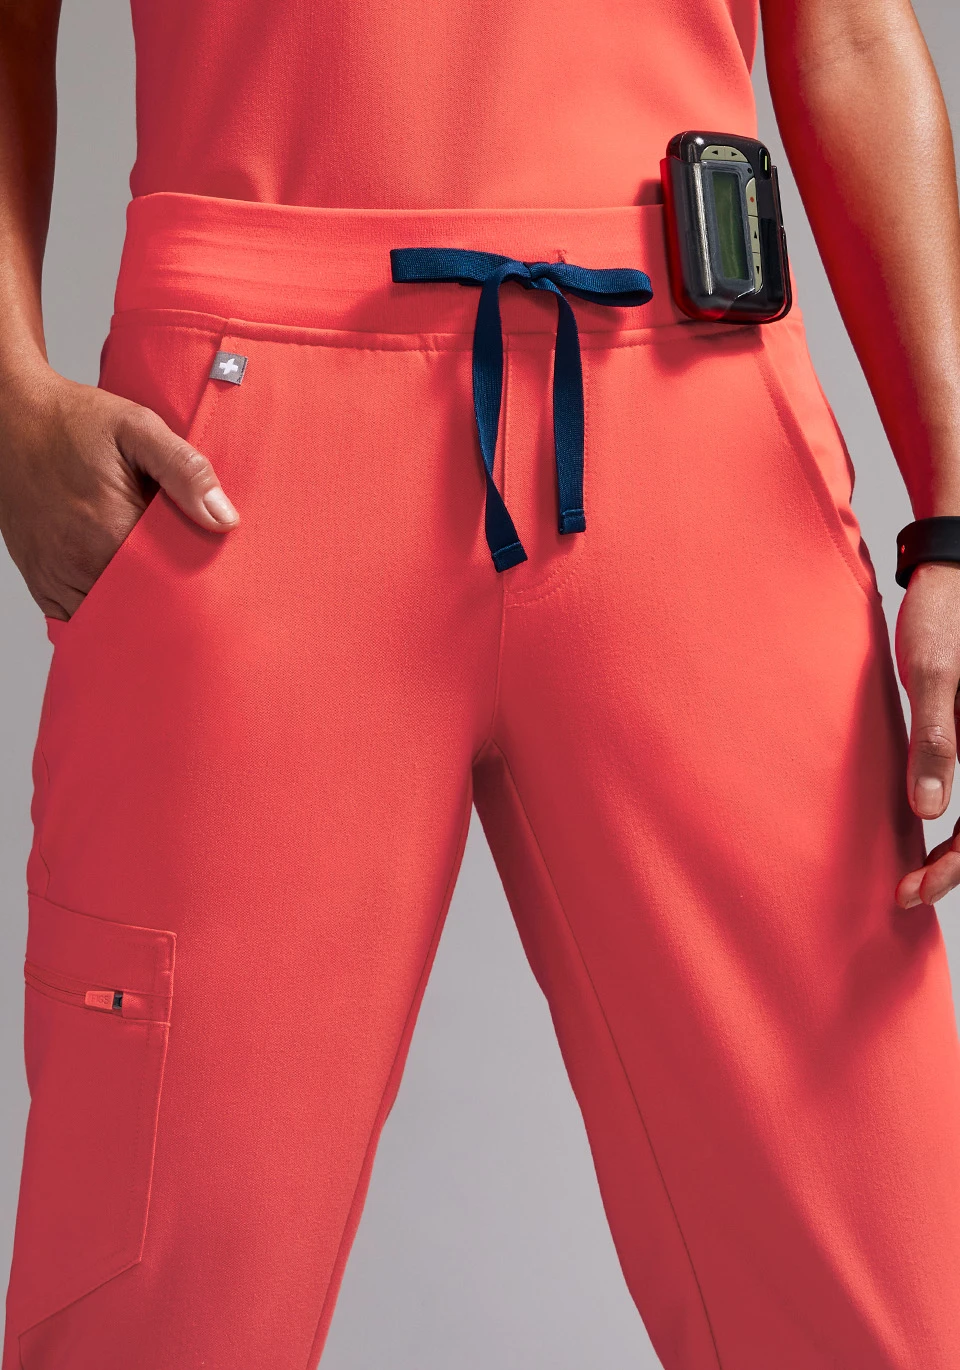 FIGS Zamora Jogger Style Scrub Pants for Women - Raspberry Sorbet, Tall  Small in Bahrain